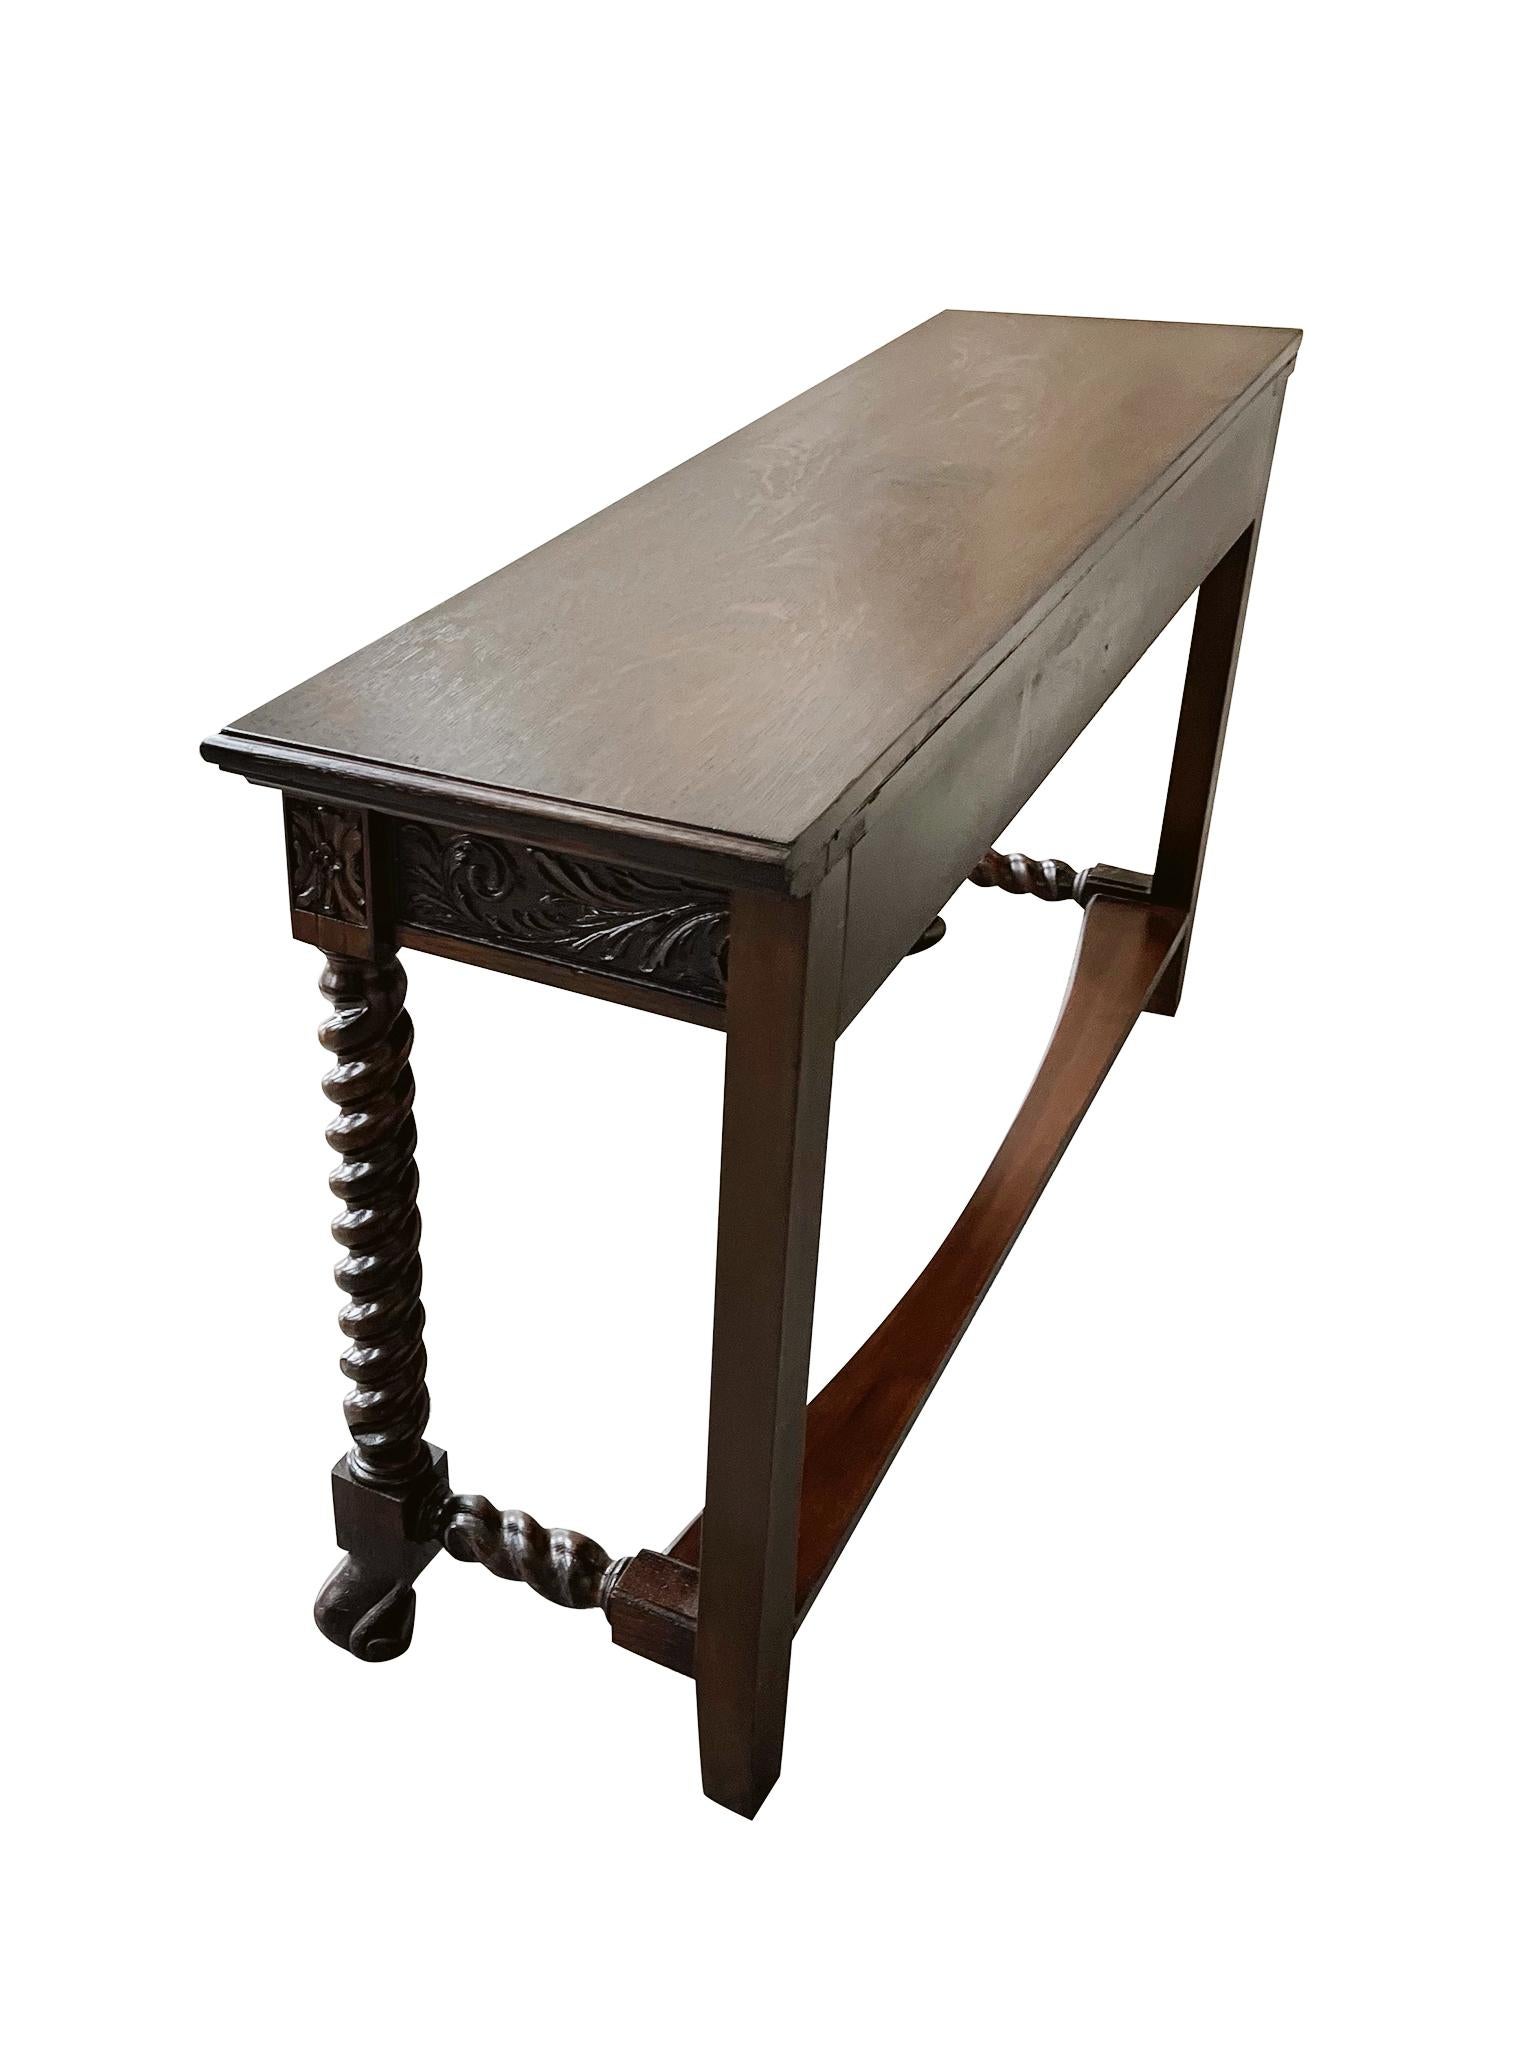 19th Century Jacobean Revival Console Table 1